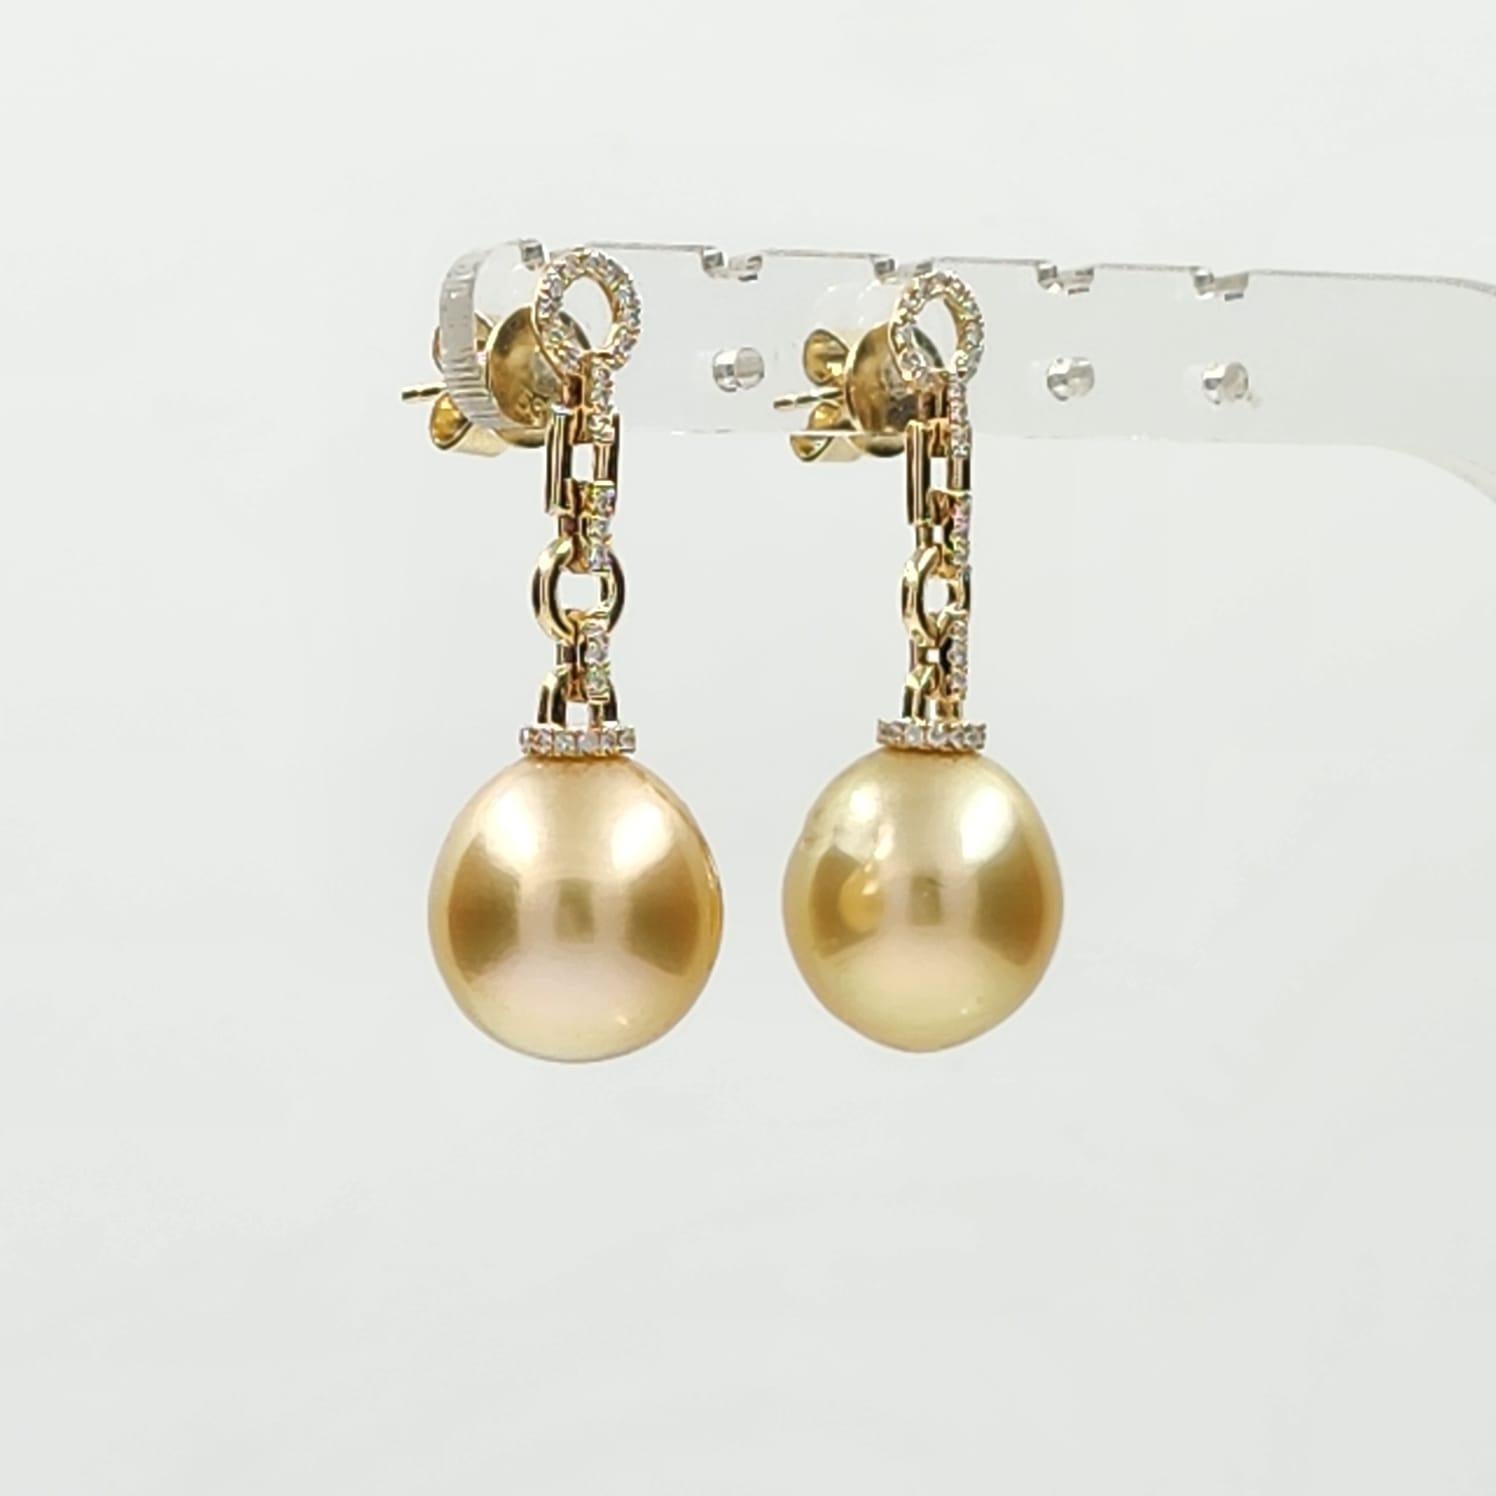 12.5 x 14mm Oval South Sea Pearl Diamond Dangle Earrings in 14 Karat Yellow Gold For Sale 1